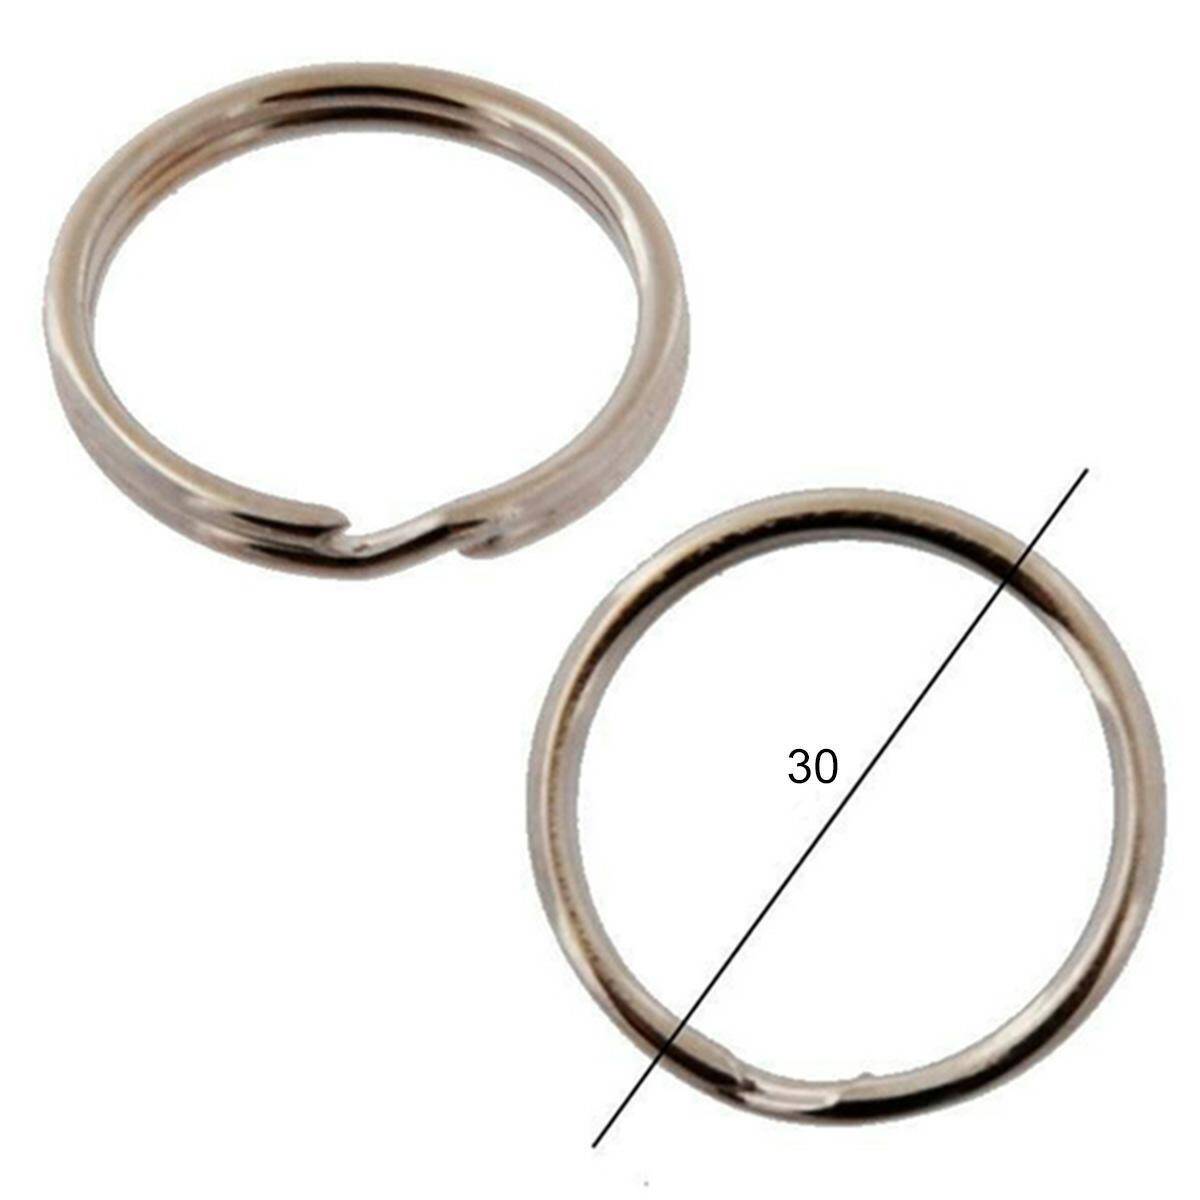 Key rings - 30mm